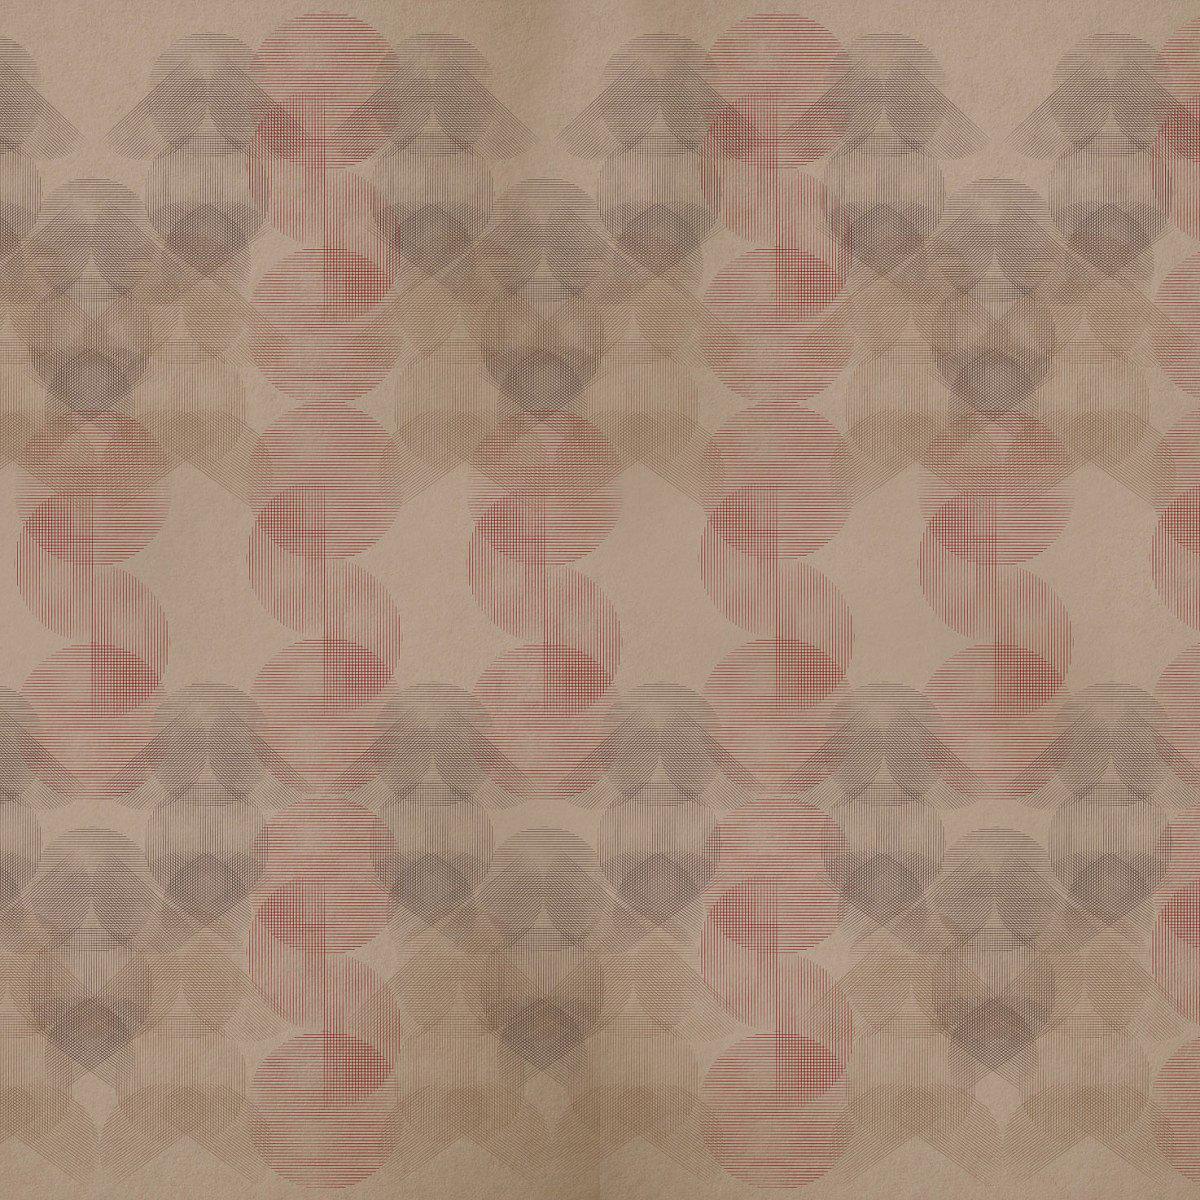 Stripes Ladybug-Digital Wallpaper-Tecnografica-Orange 1-70874-1C